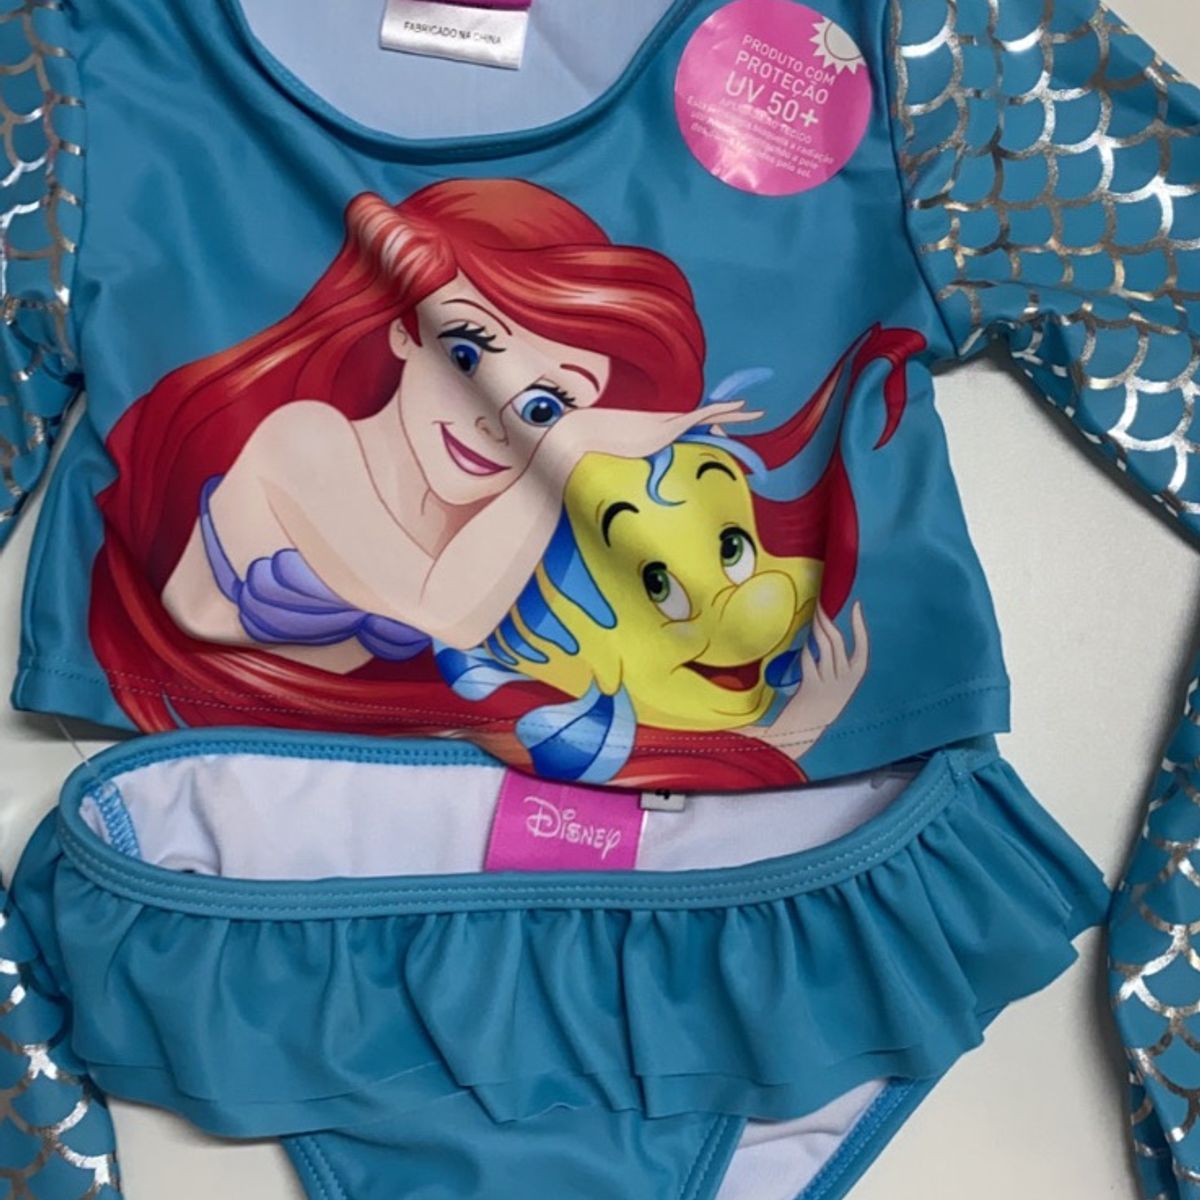 Biquini Infantil Disney Princesa Ariel, Roupa Infantil para Menina Disney  Usado 94959890